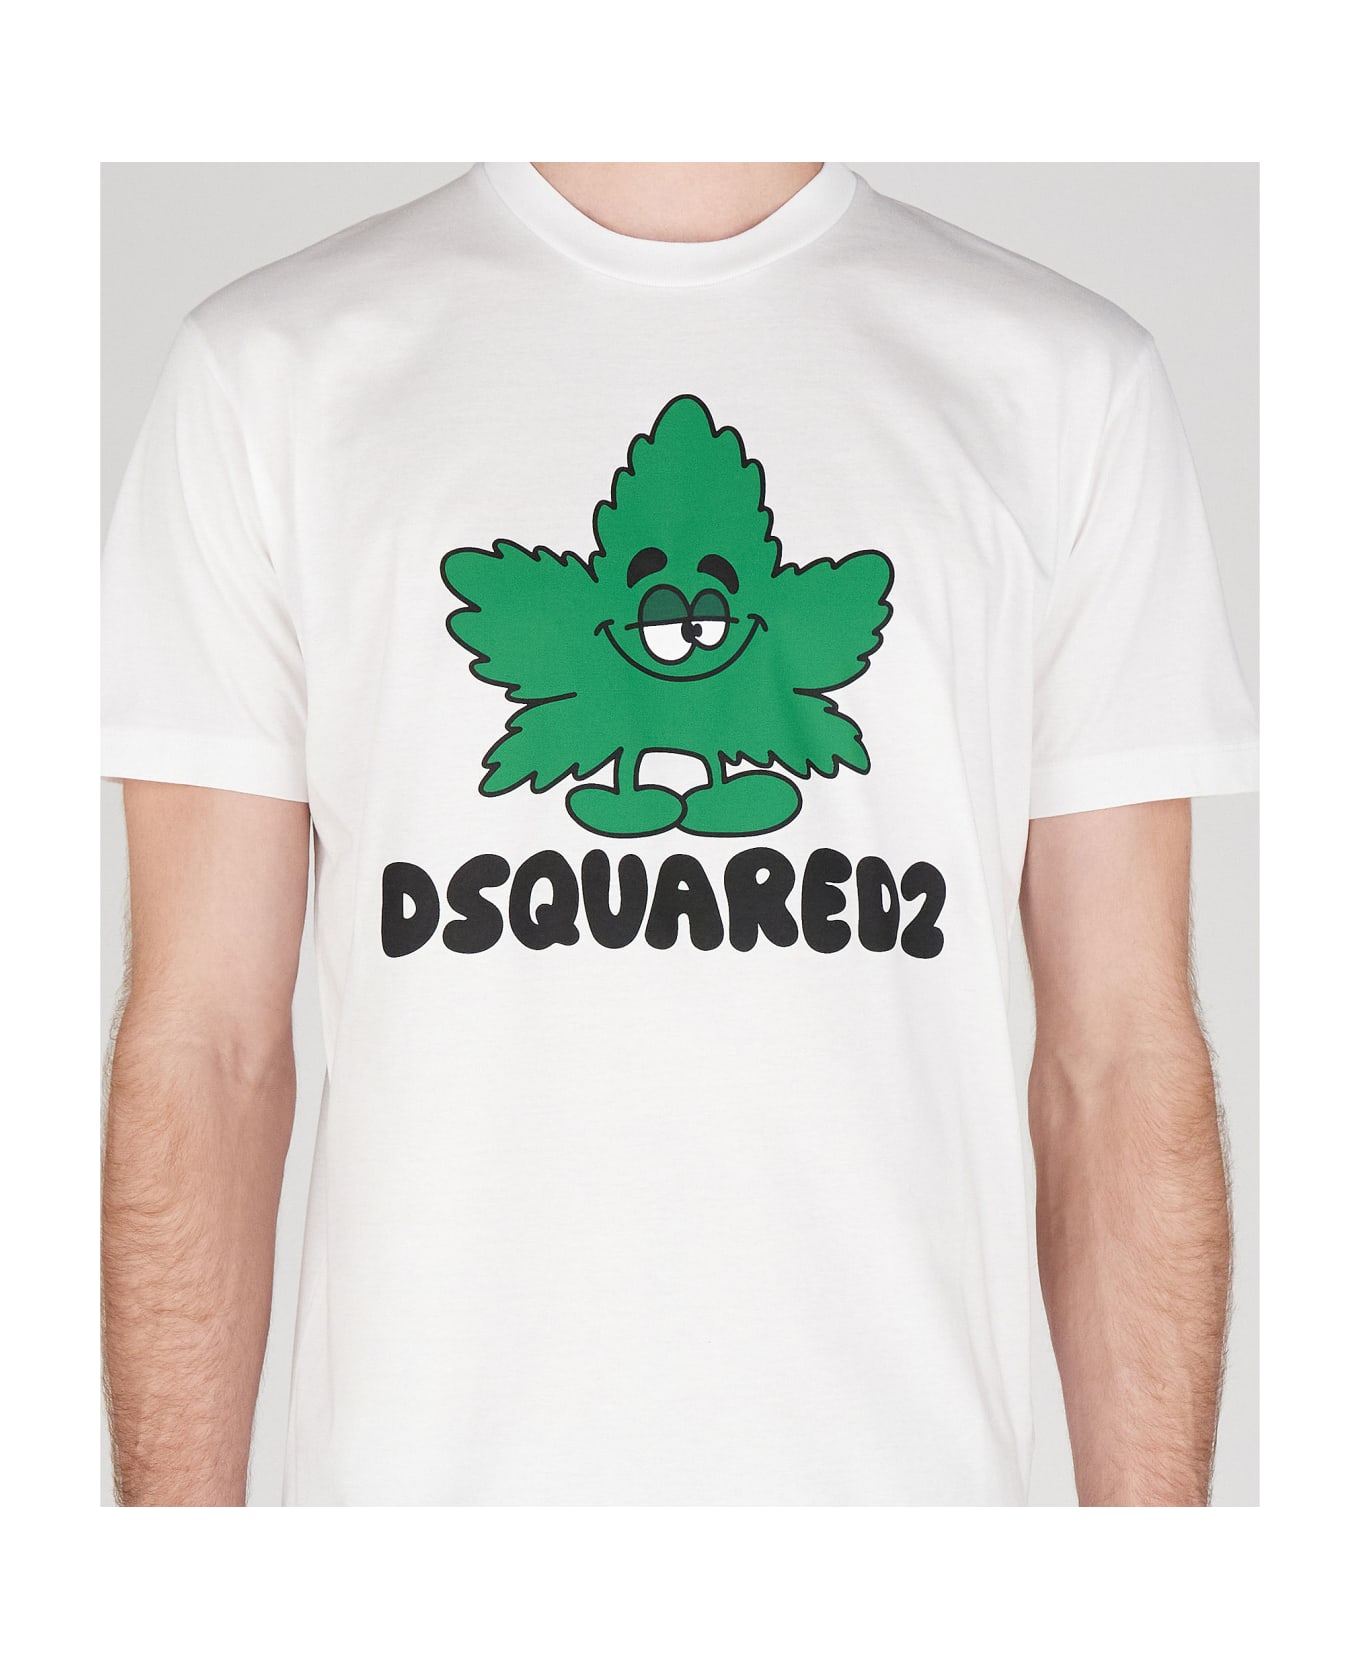 Dsquared2 White D2 Maple Leaf Cool T-shirt - White シャツ